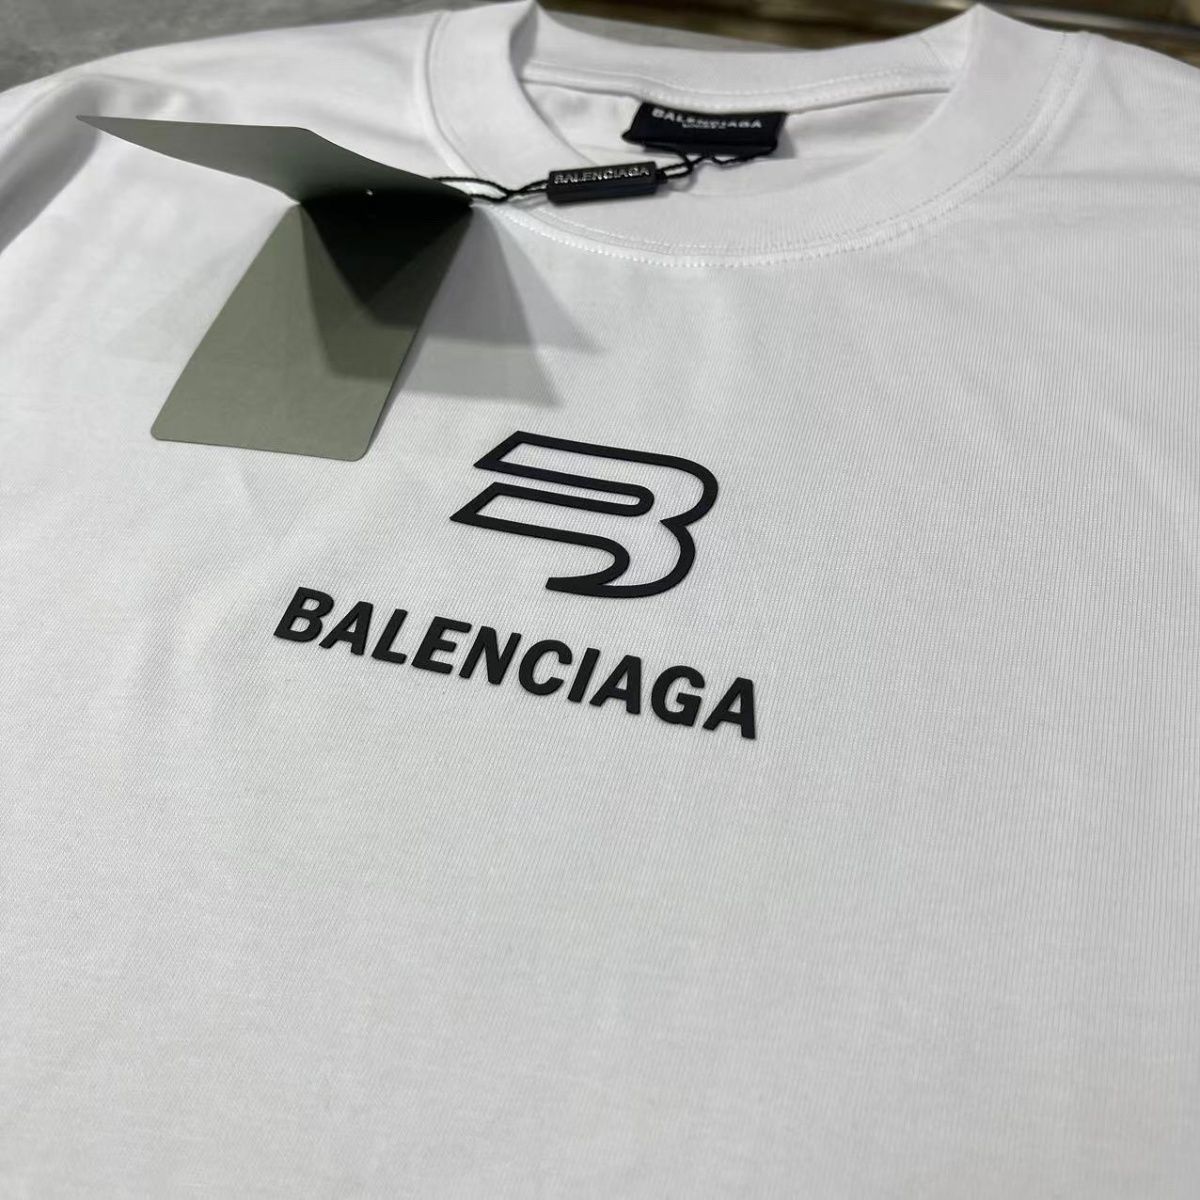 Balenciaga Summer Cotton Breathable Unisex Leisure T-shirt